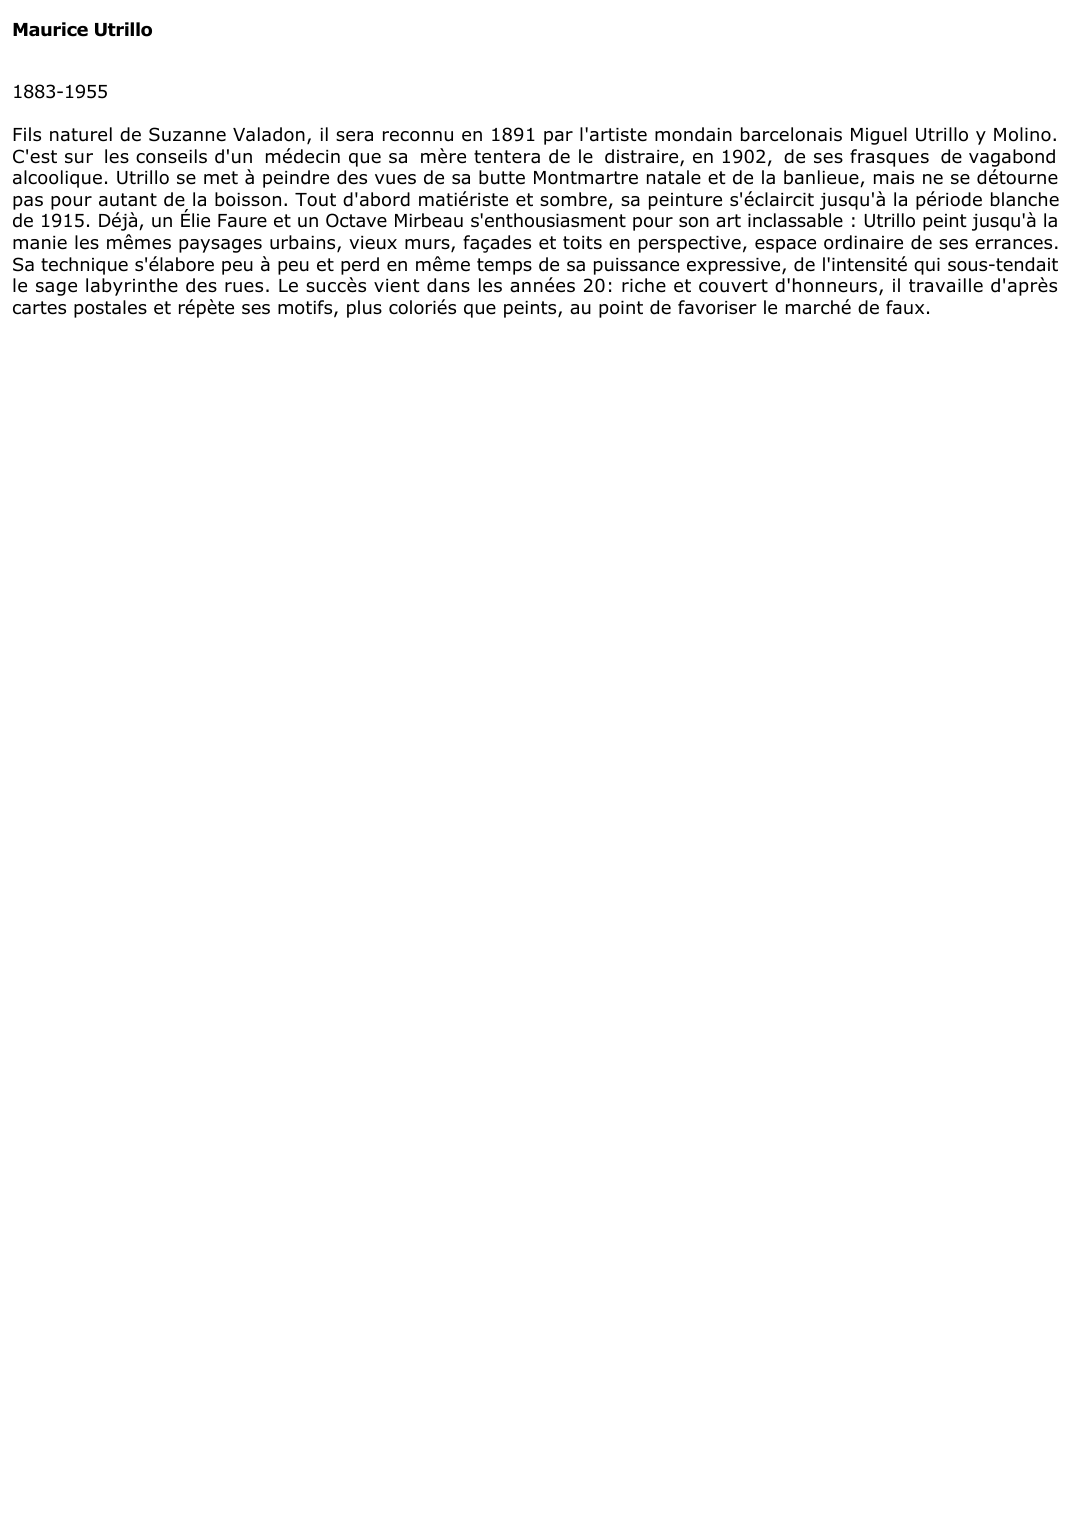 Prévisualisation du document Maurice Utrillo